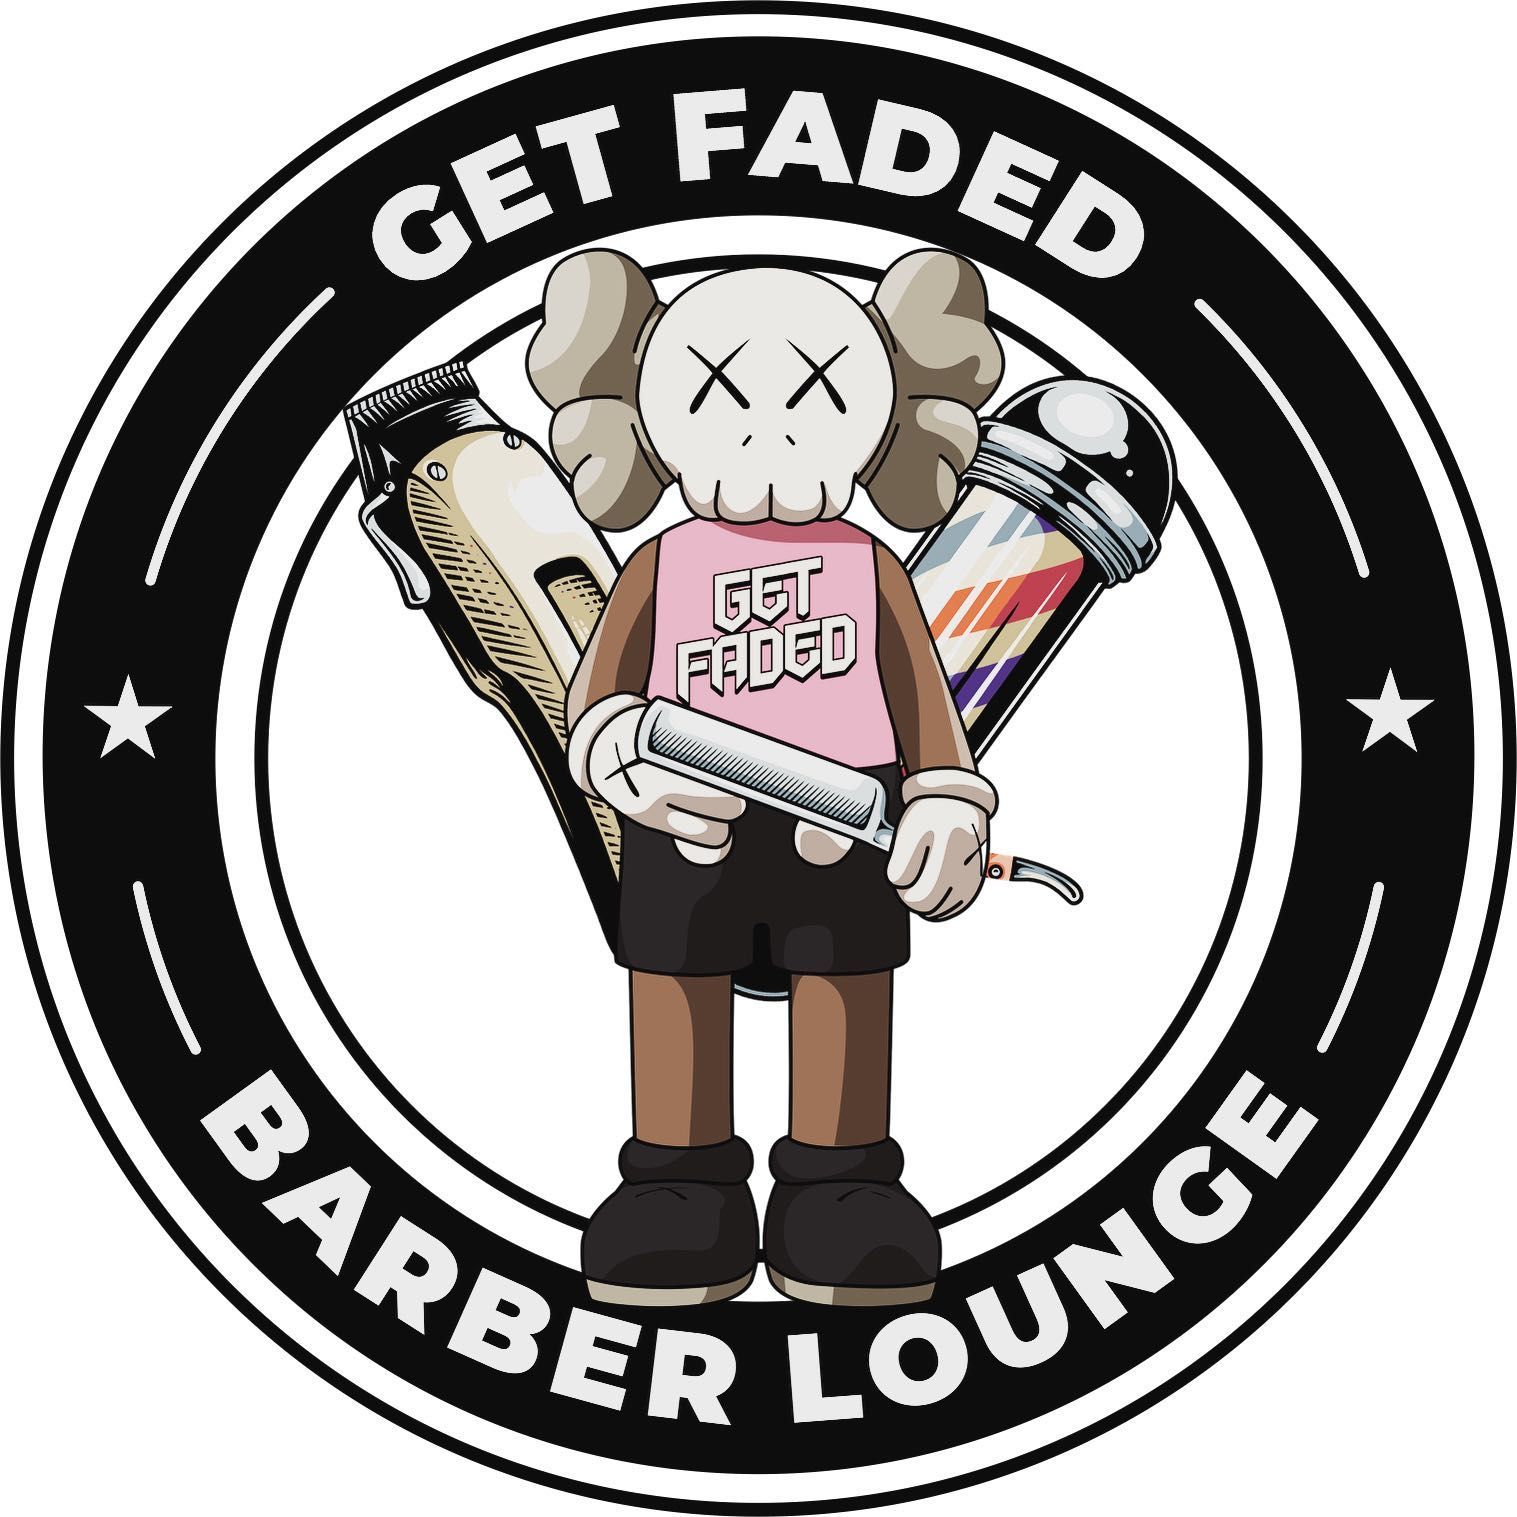 Get Faded Barber Lounge, 13300 Nacogdoches Rd, San Antonio, 78217